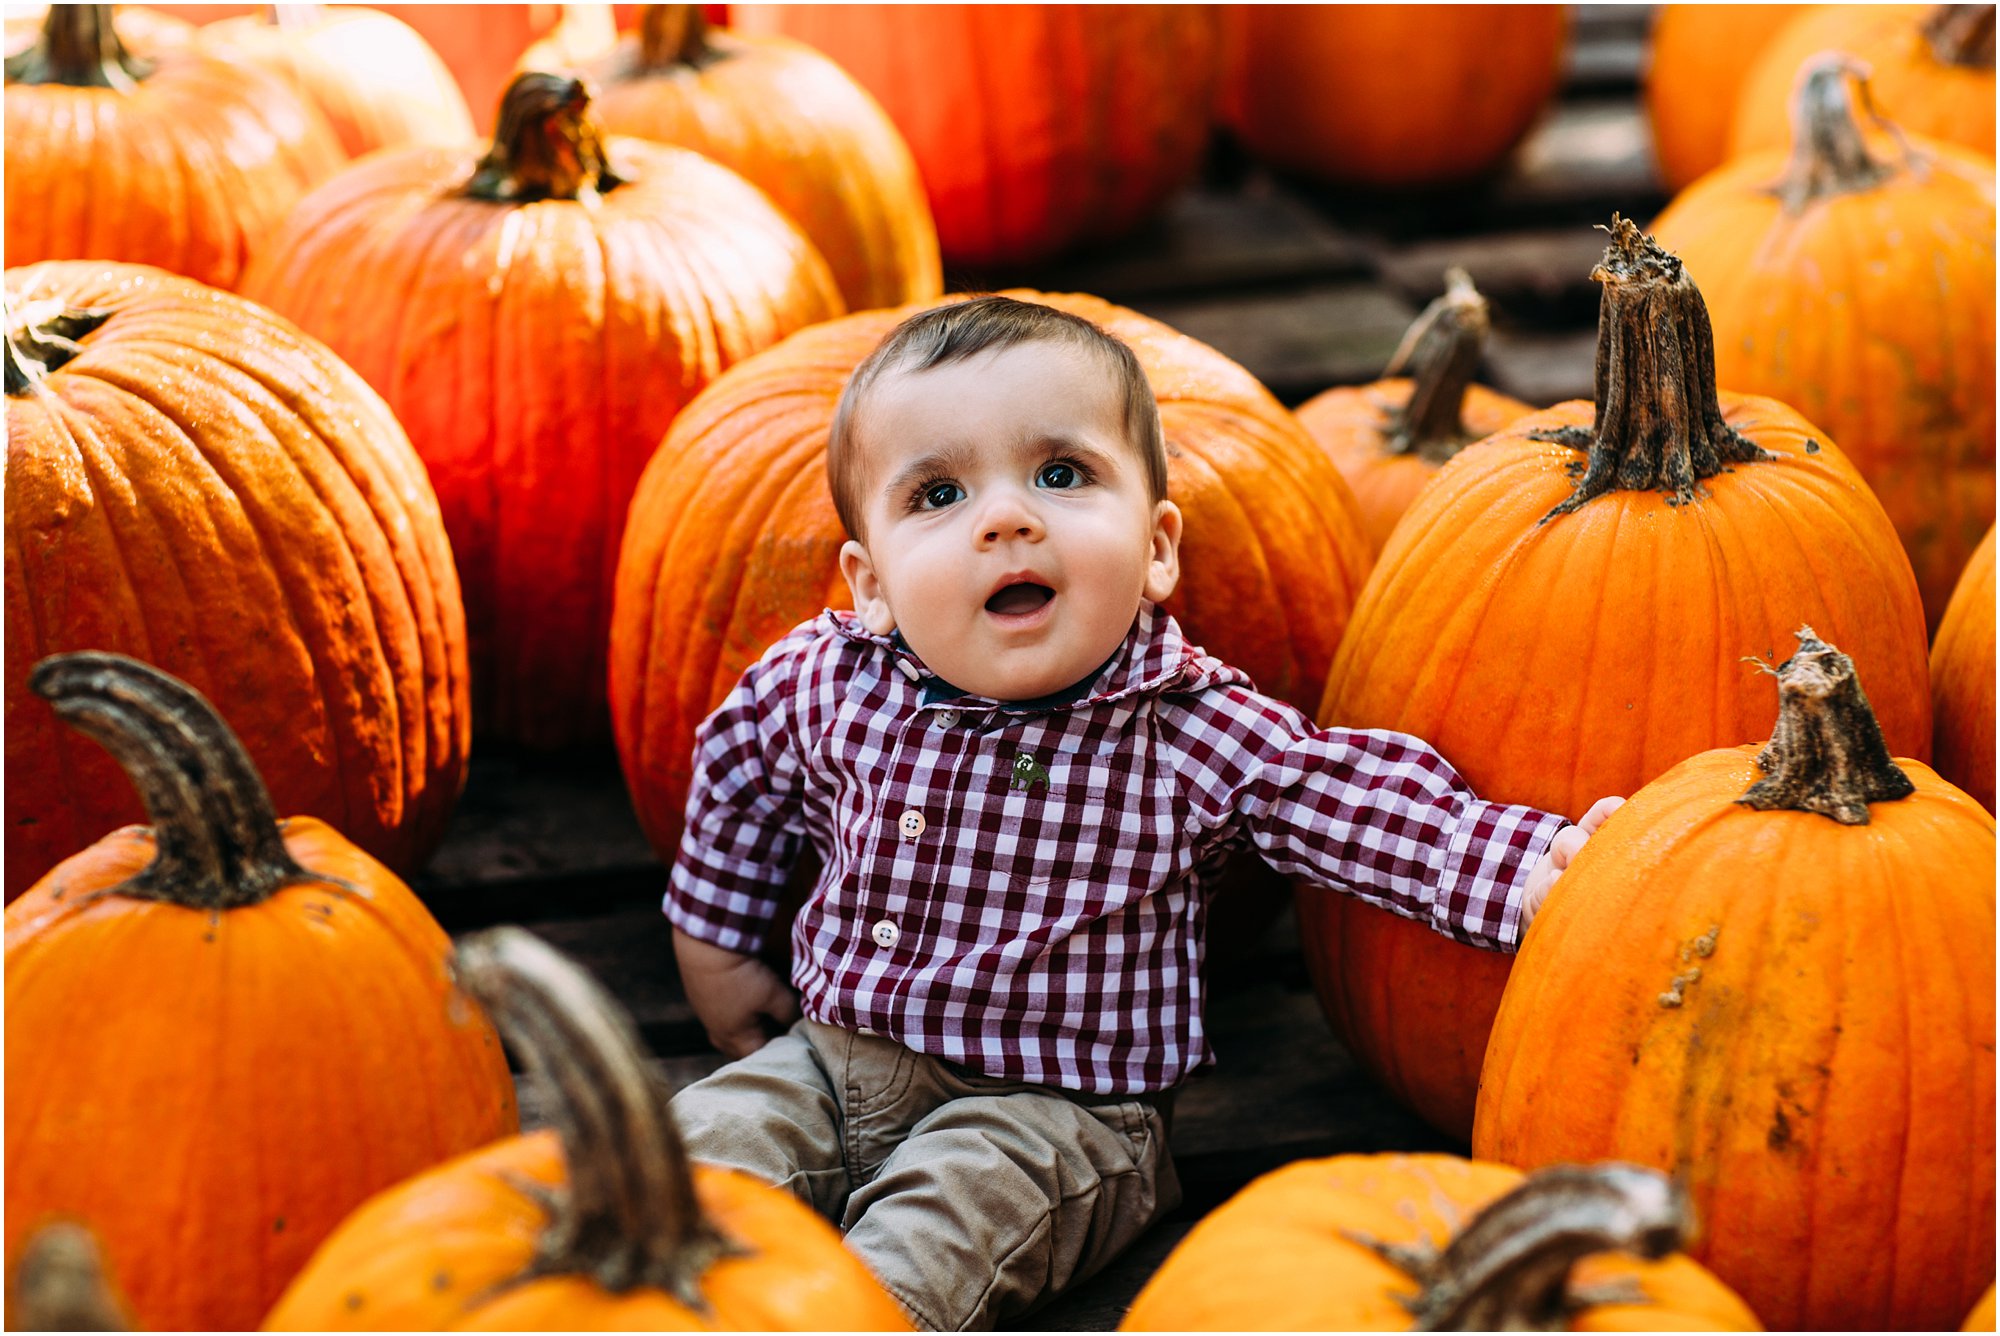 Cute little boy sitting in a pumpkin patch surrounded by orange pumpkins